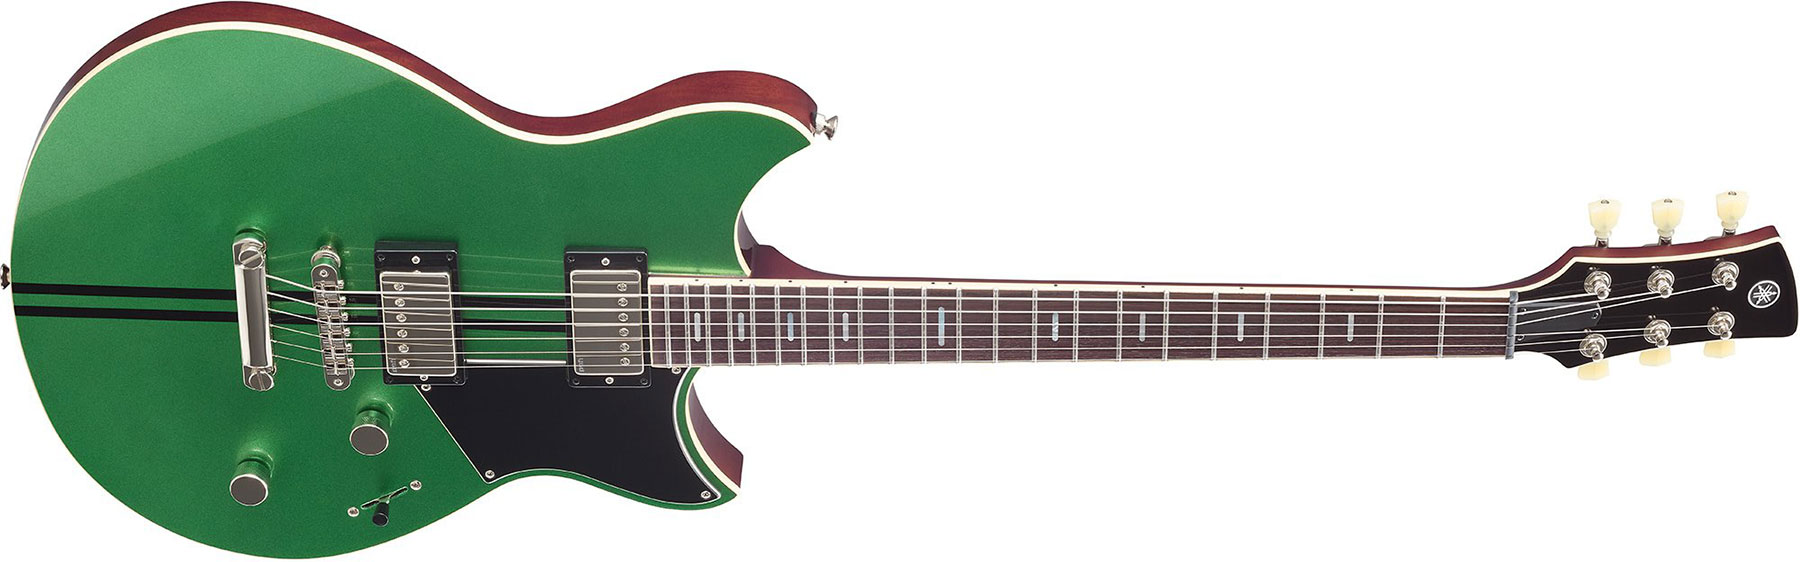 Yamaha Rss20 Revstar Standard Hh Ht Rw - Flash Green - Double Cut E-Gitarre - Variation 1